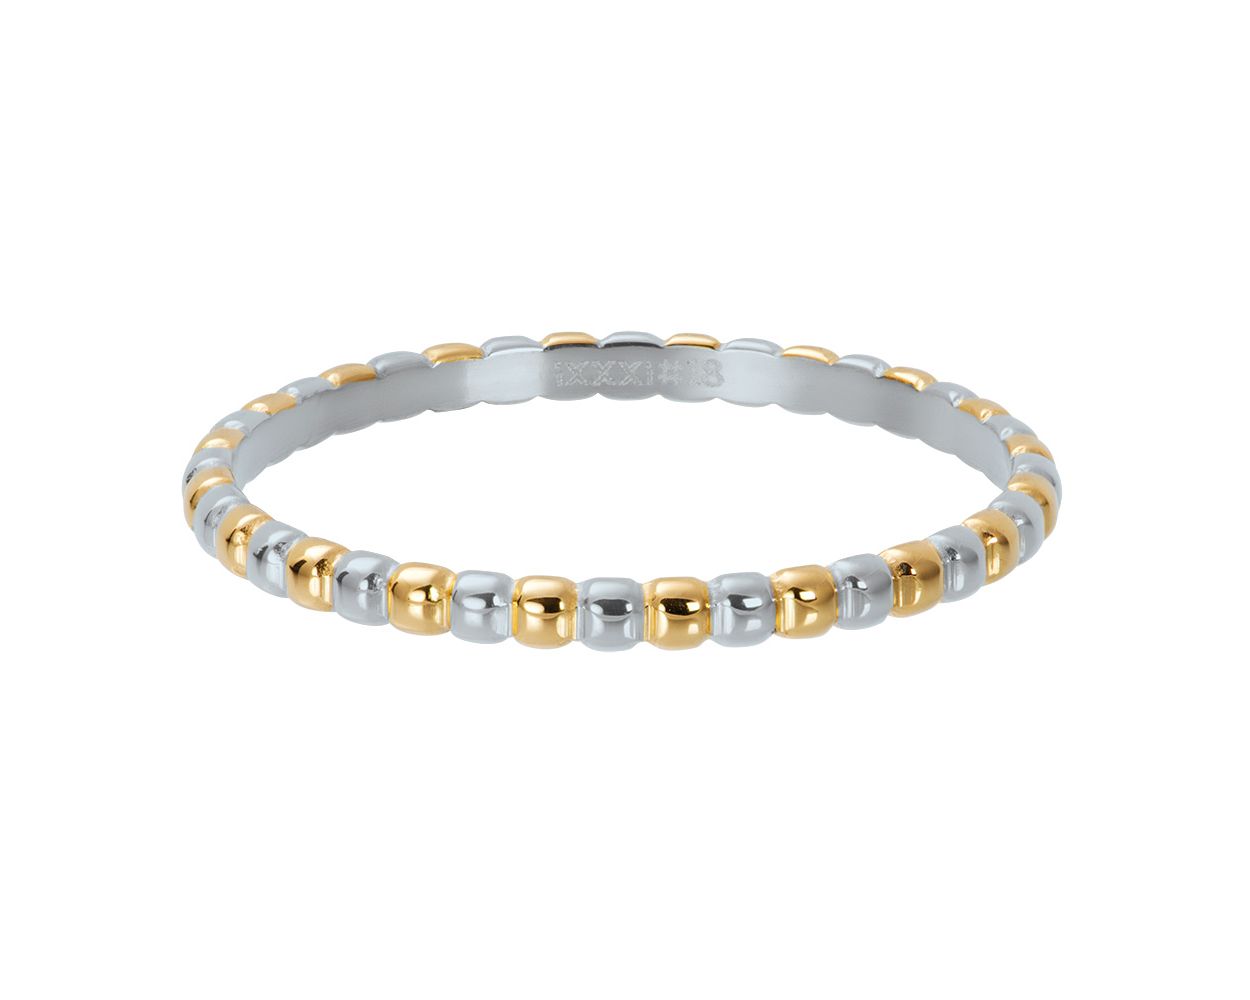 iXXXi Ring Tiny Beads - R02802-12